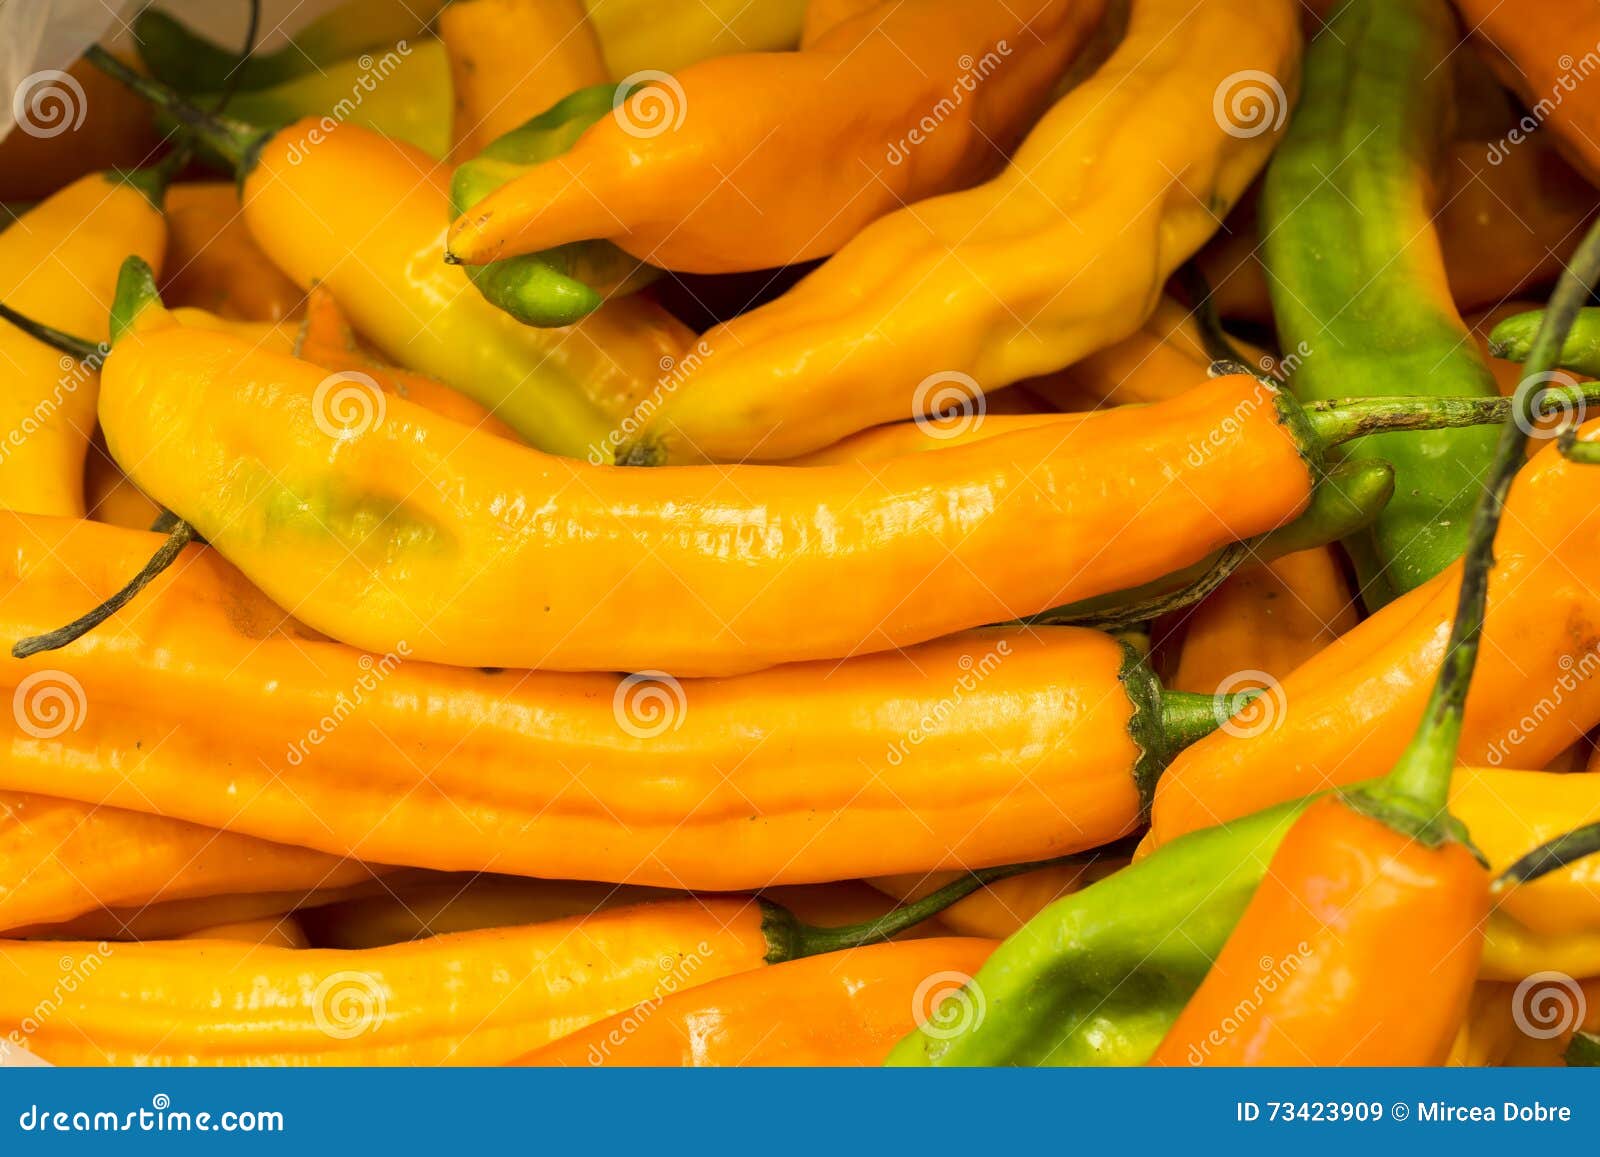 aji amarillo, yellow chili pepper from south america, arequipa, peru. natural market look